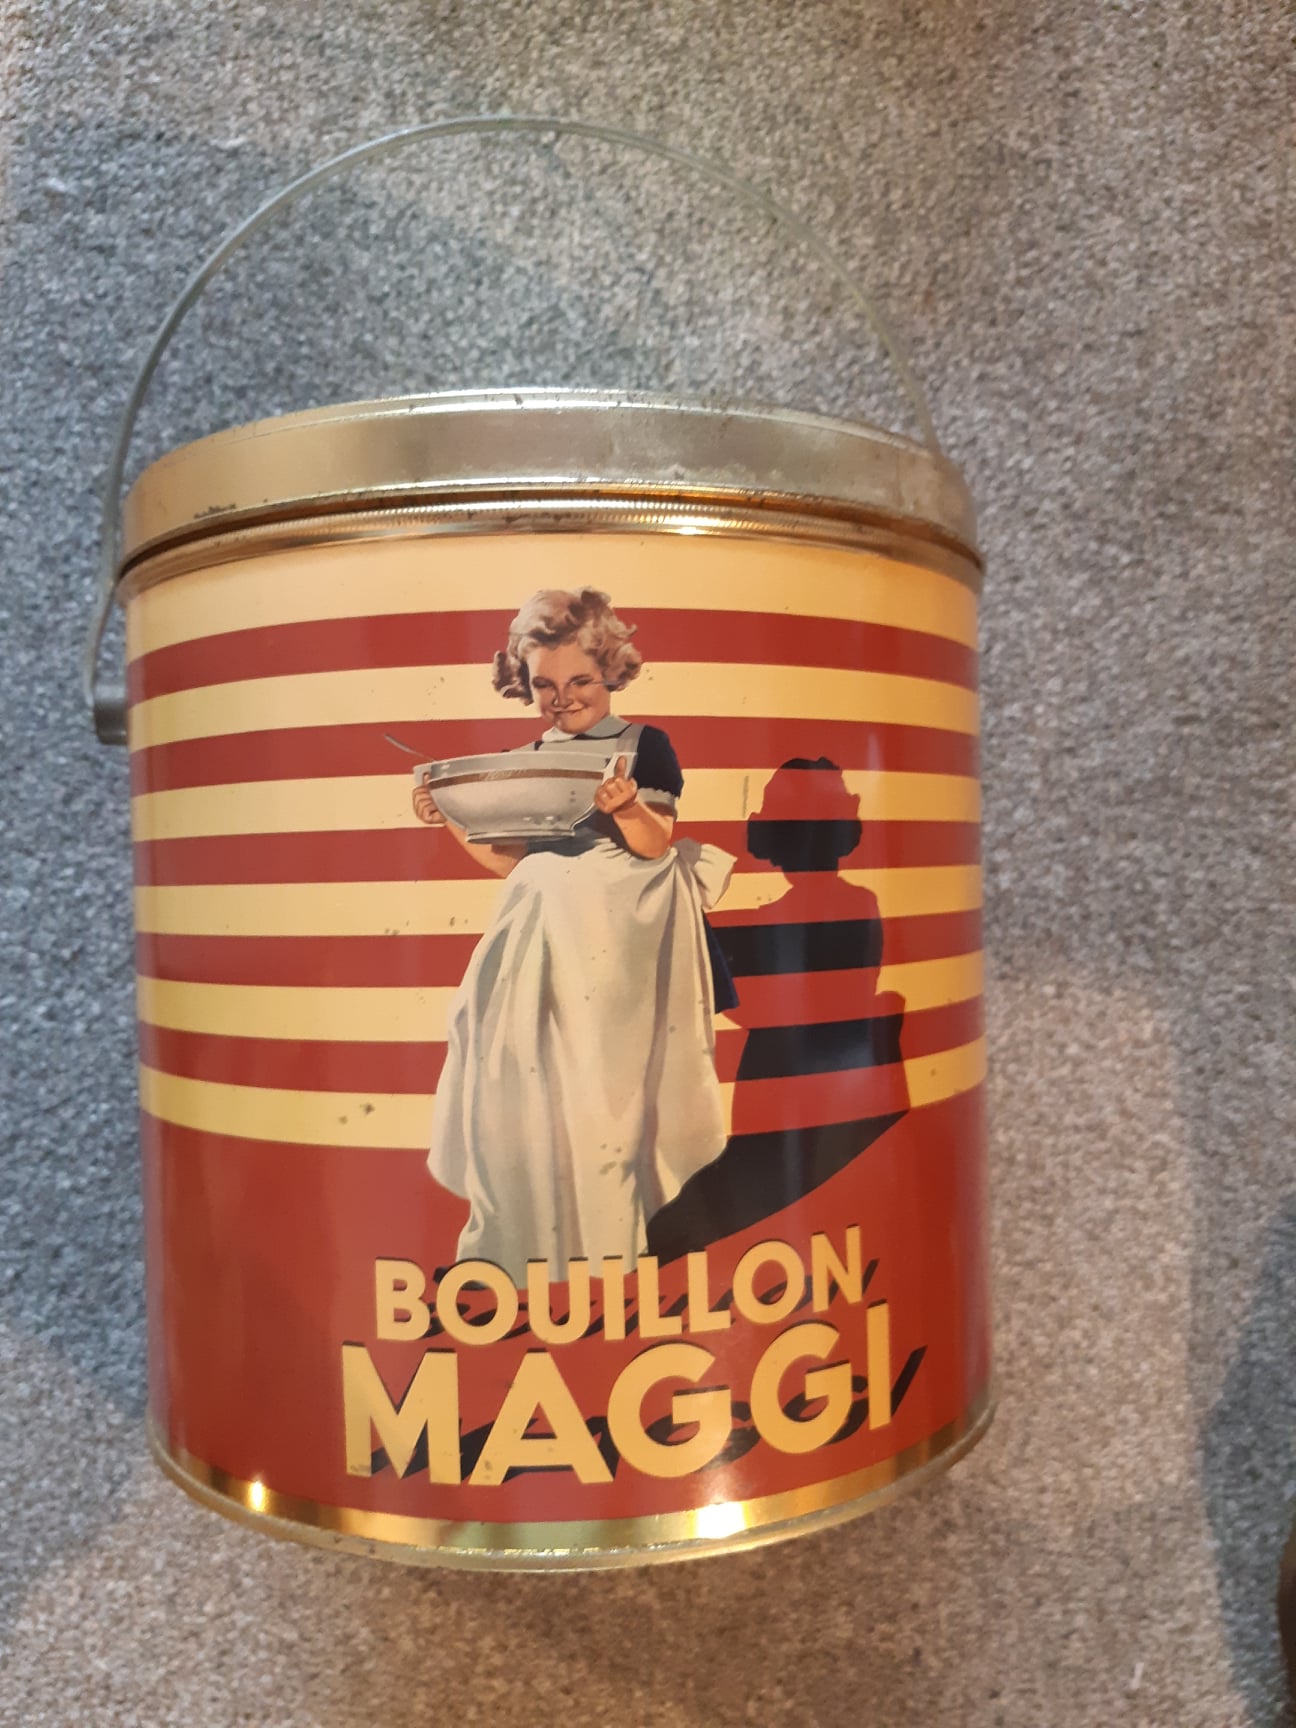 blik (emmertje) van Maggi bouillon, limmited edition 1994